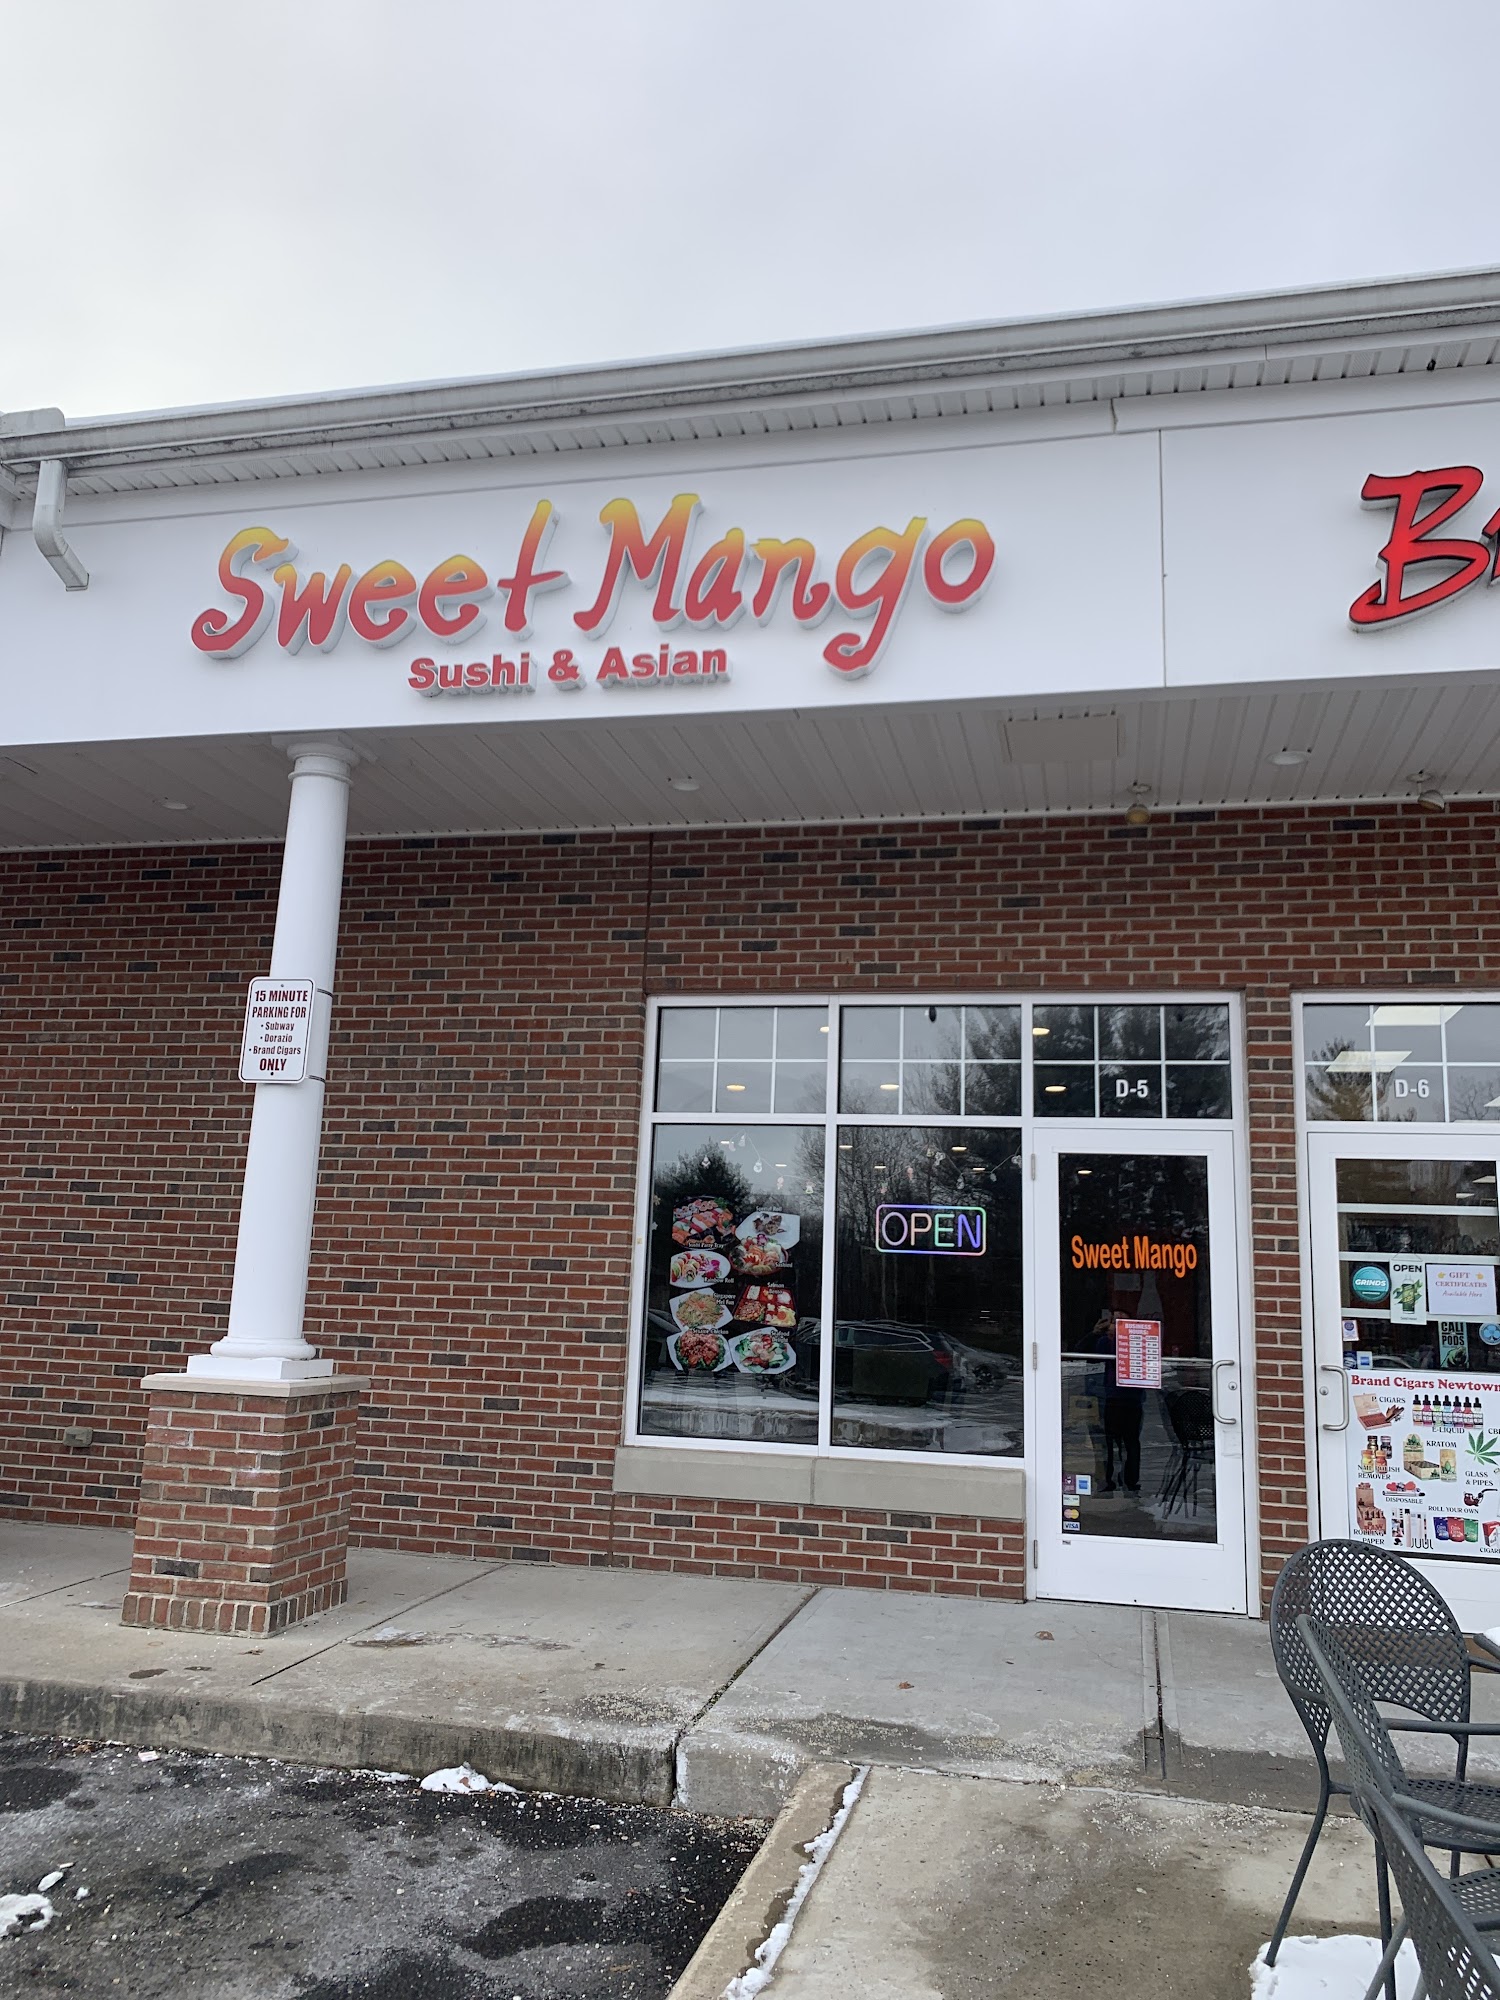 Sweet mango Asian restaurant and sushi bar